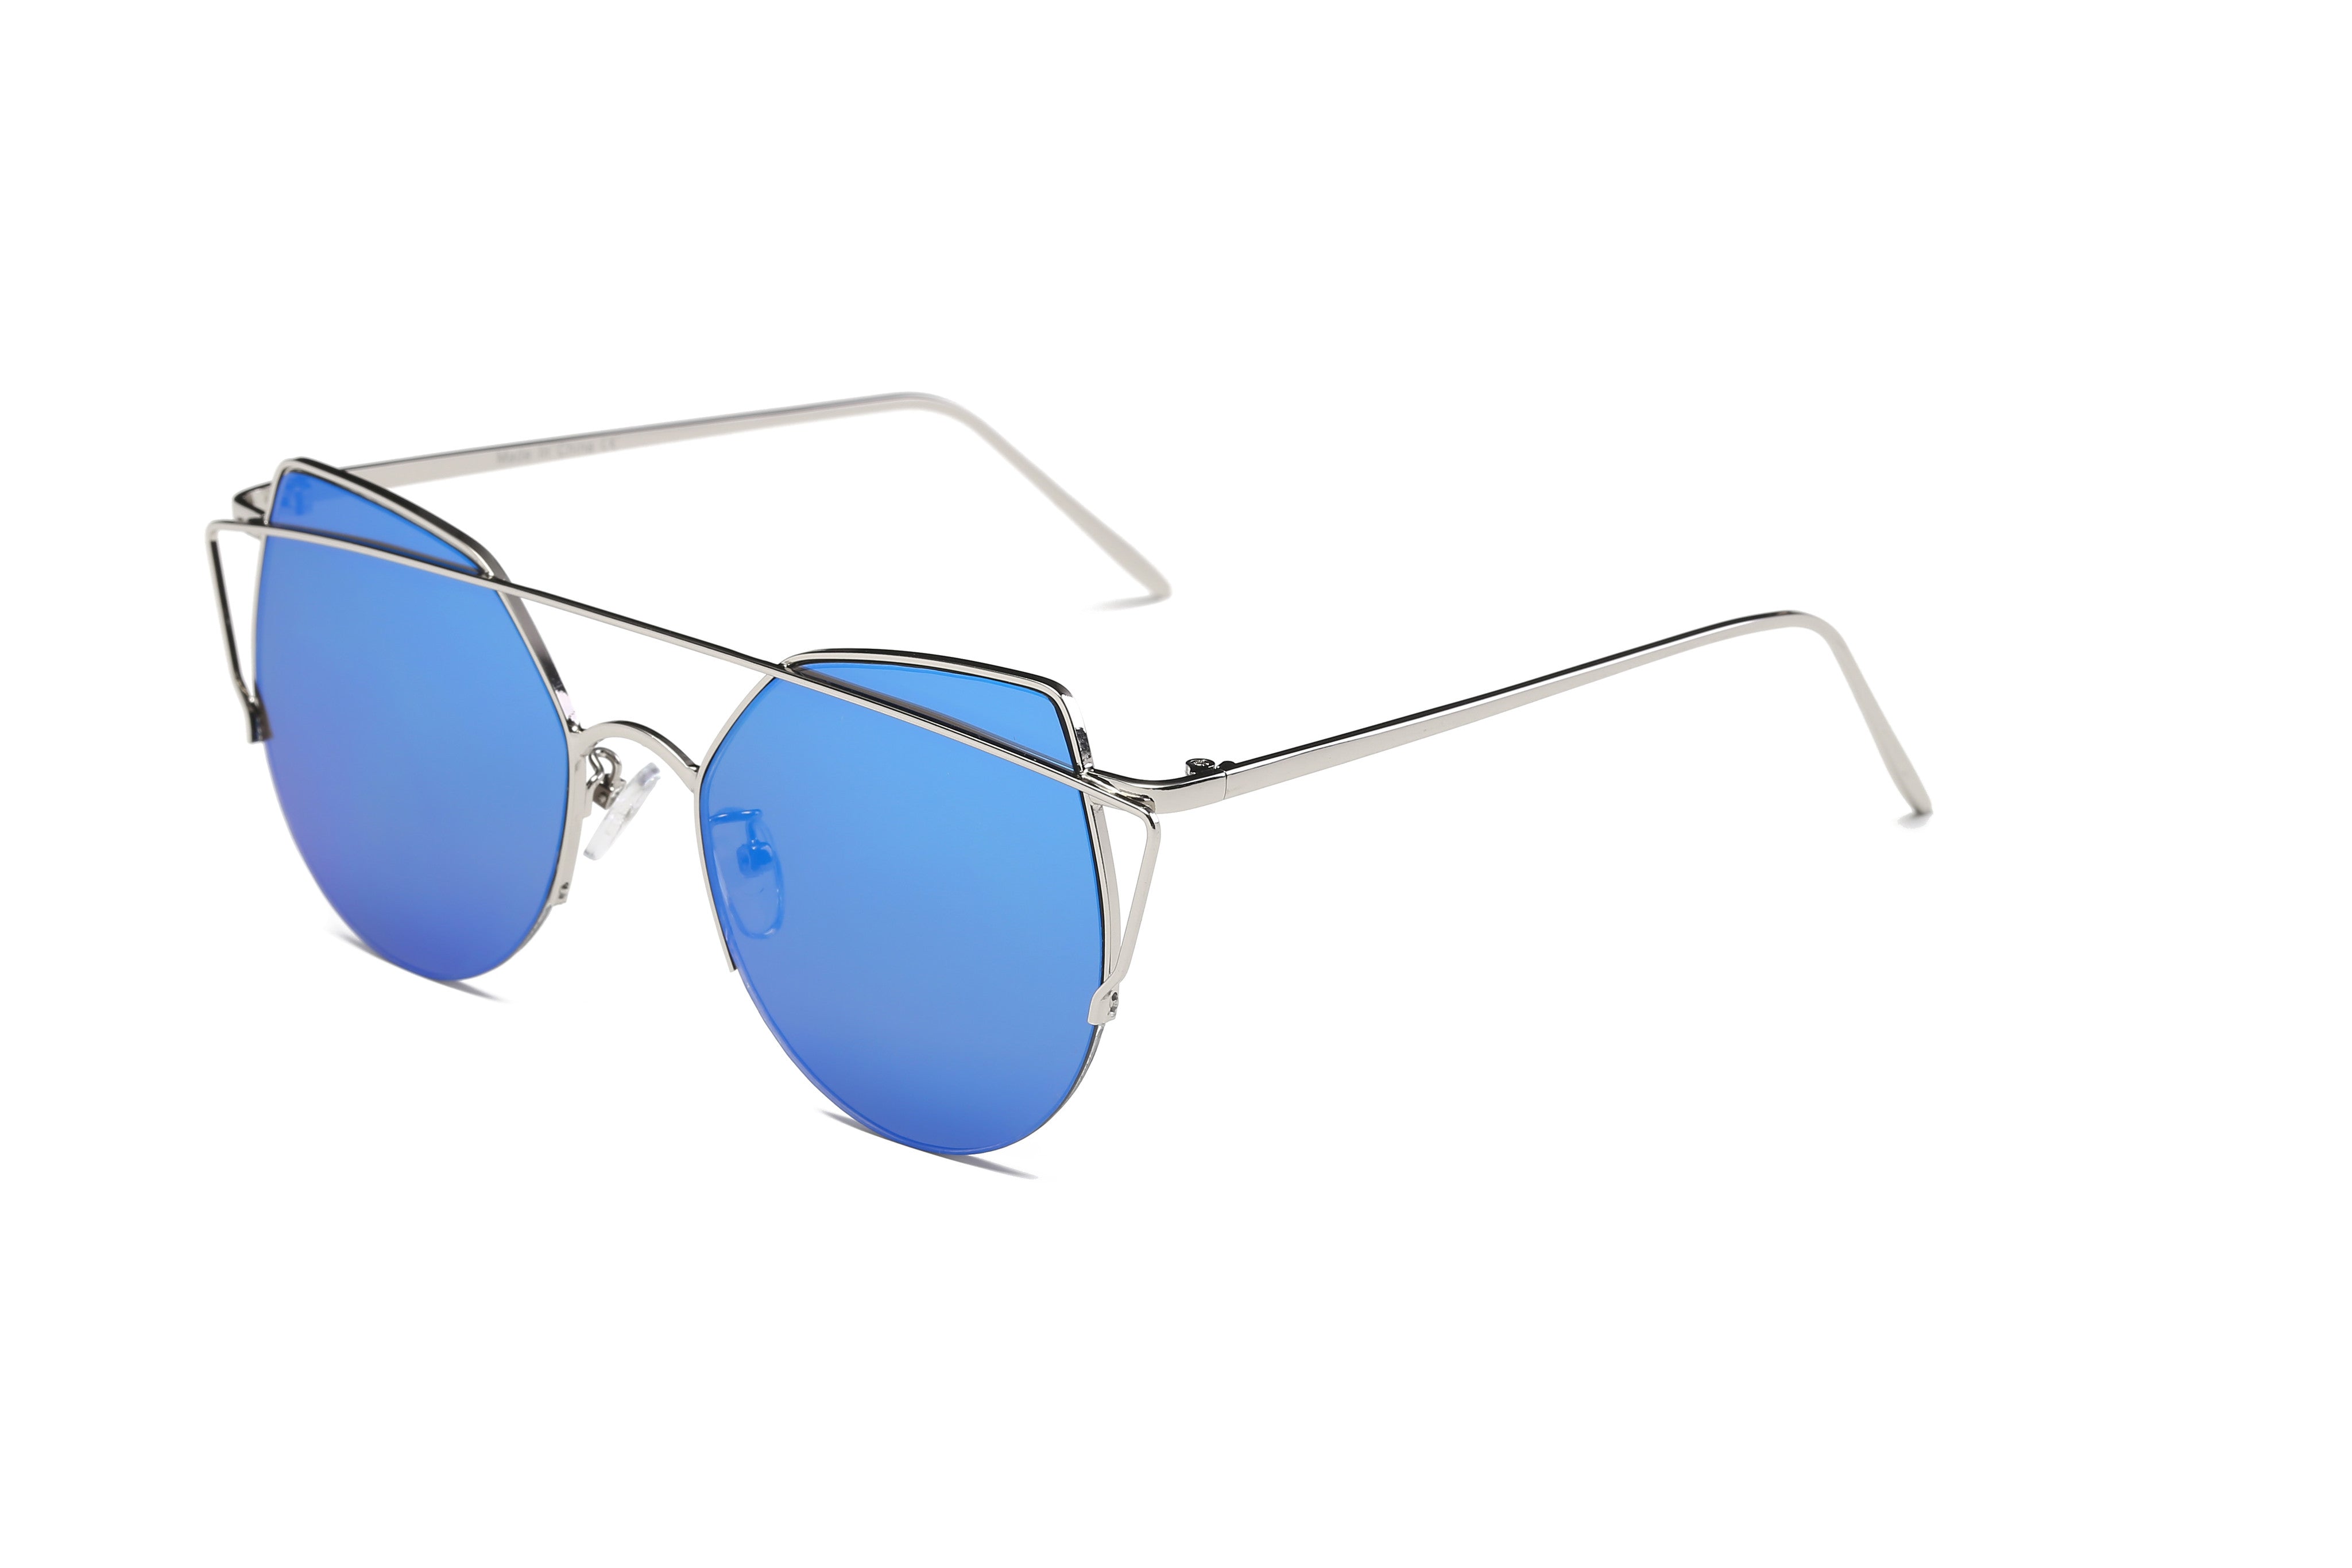 D70 - Women High Pointed Cat Eye Fashion Mirrored Sunglasses Silver FRAME - Blue Lens